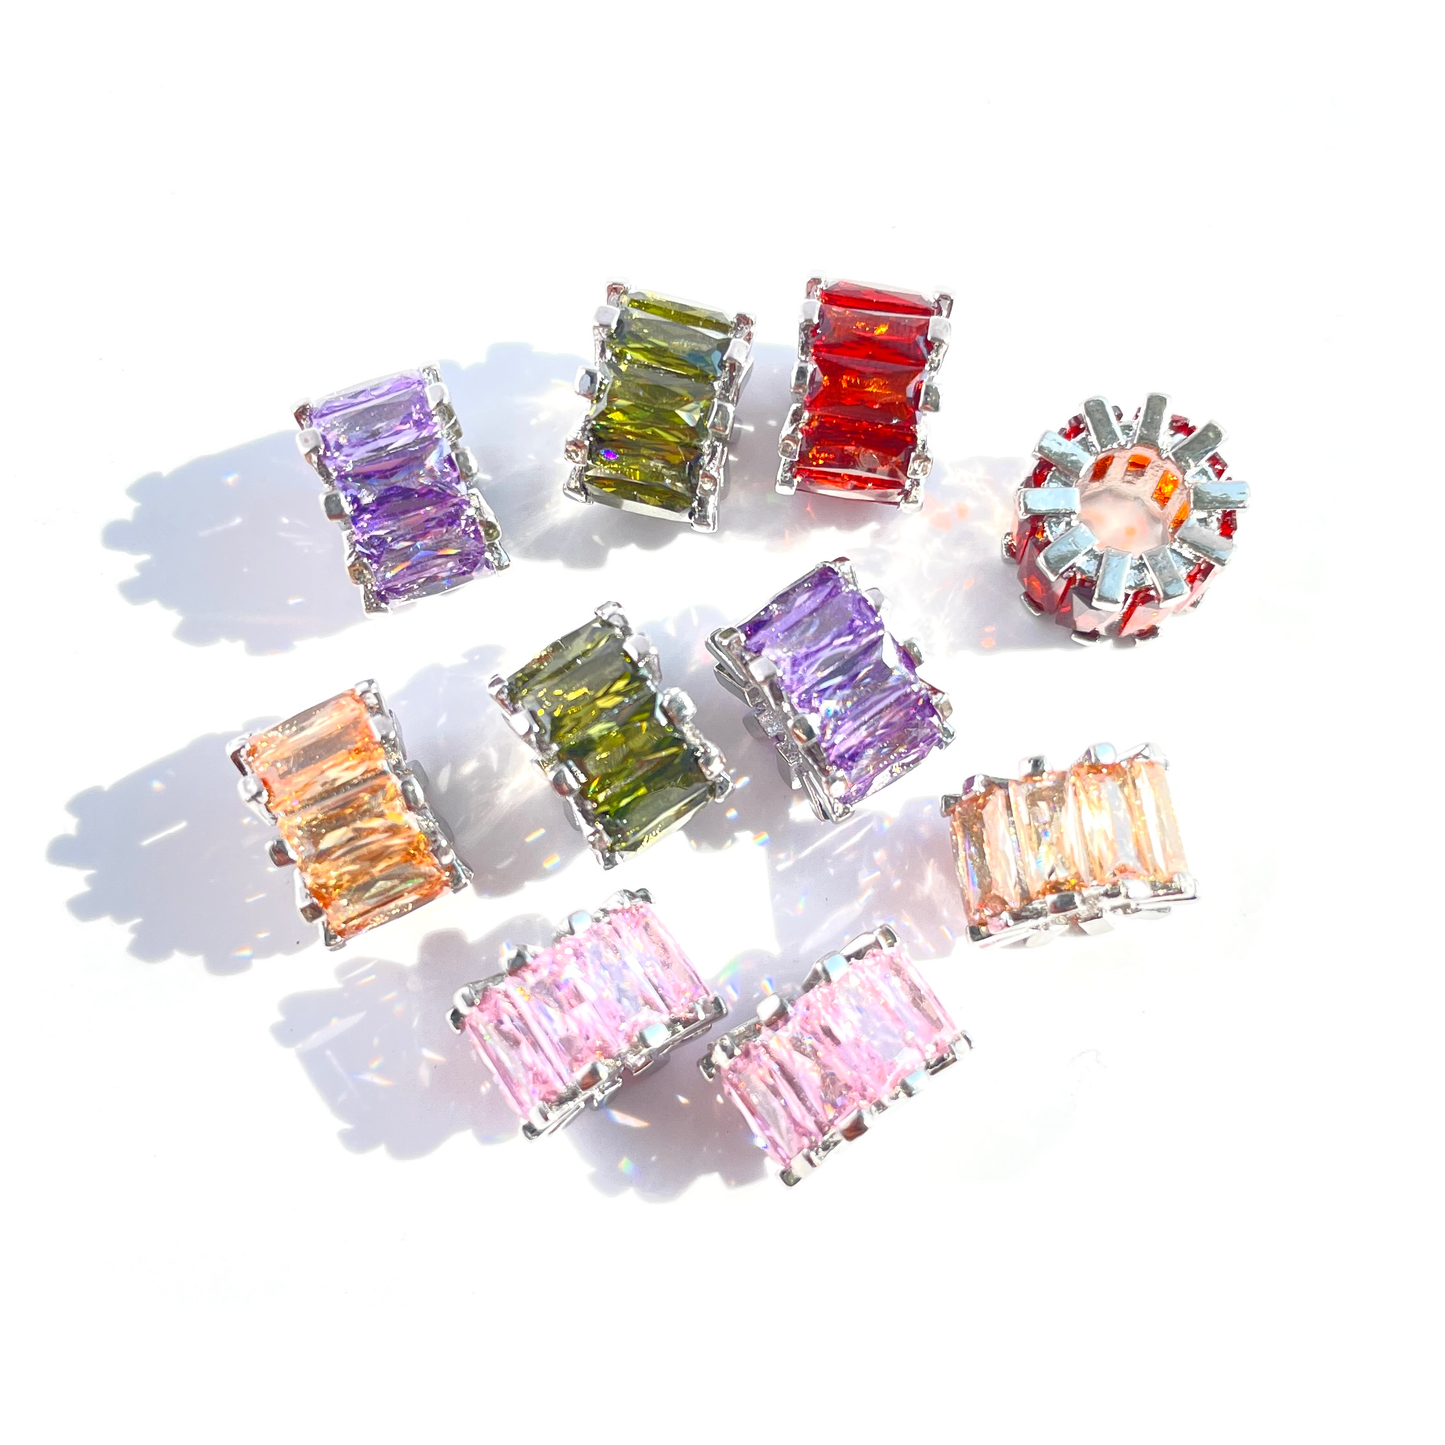 10pcs/lot 9.5*6.4mm Multicolor CZ Paved Big Hole Spacers Mix Silver CZ Paved Spacers Big Hole Beads New Spacers Arrivals Charms Beads Beyond